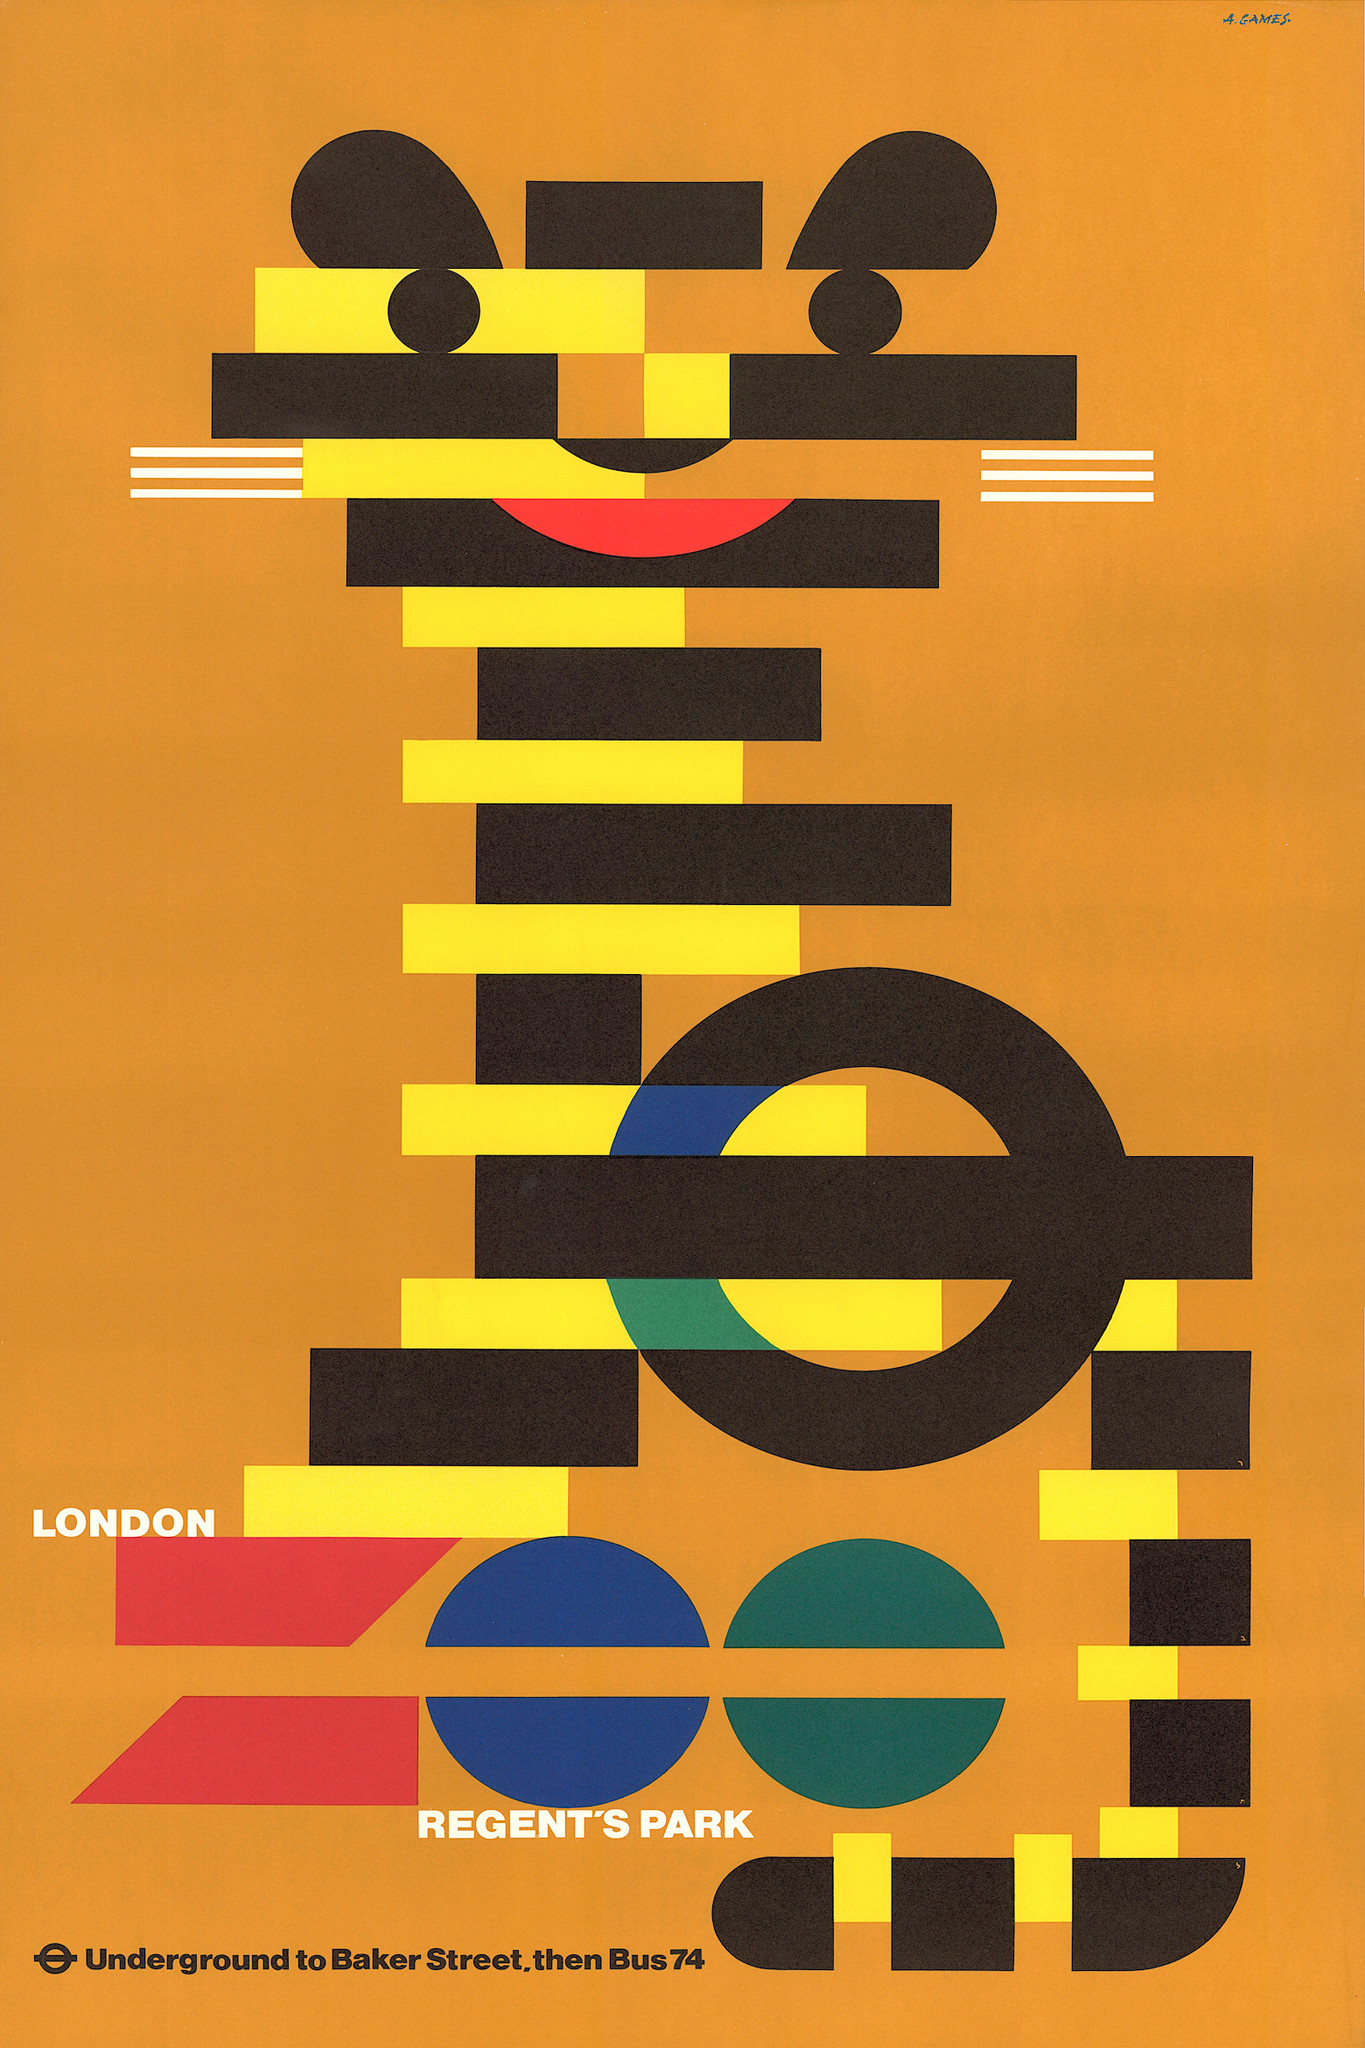 Poster - Tiger, London Zoo, 1976 Londen, Premium Print, Verpakt in stevige kartonnen rolkoker